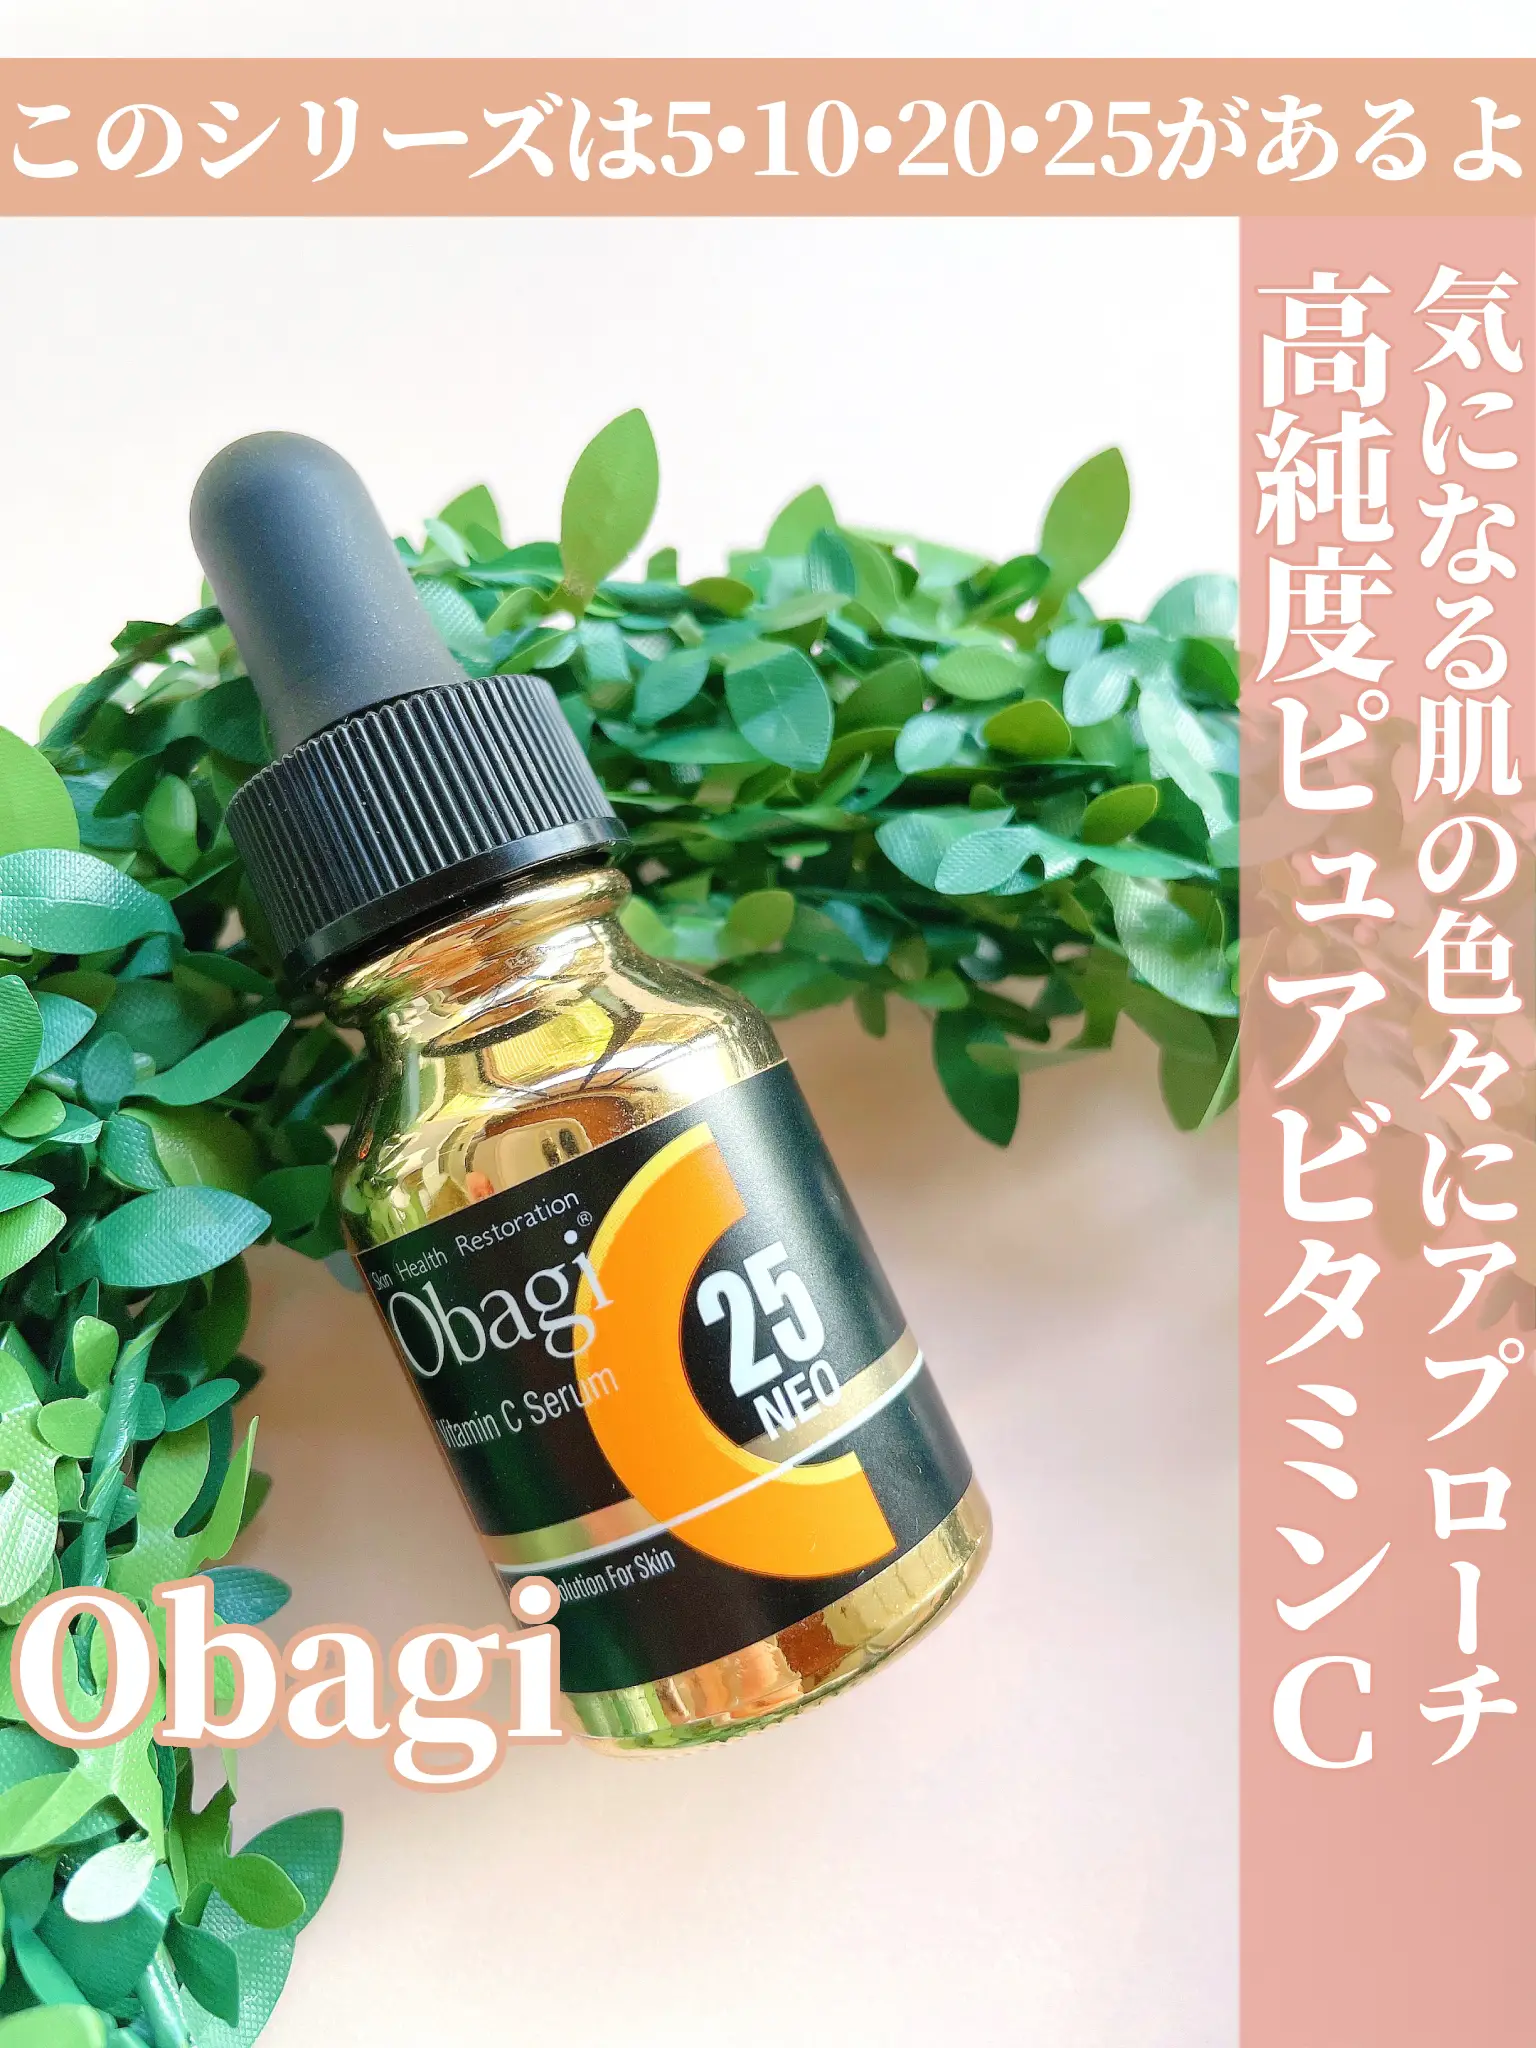 Obagi】花粉症の時期によりオススメしたい美容液✨【オバジCシリーズ